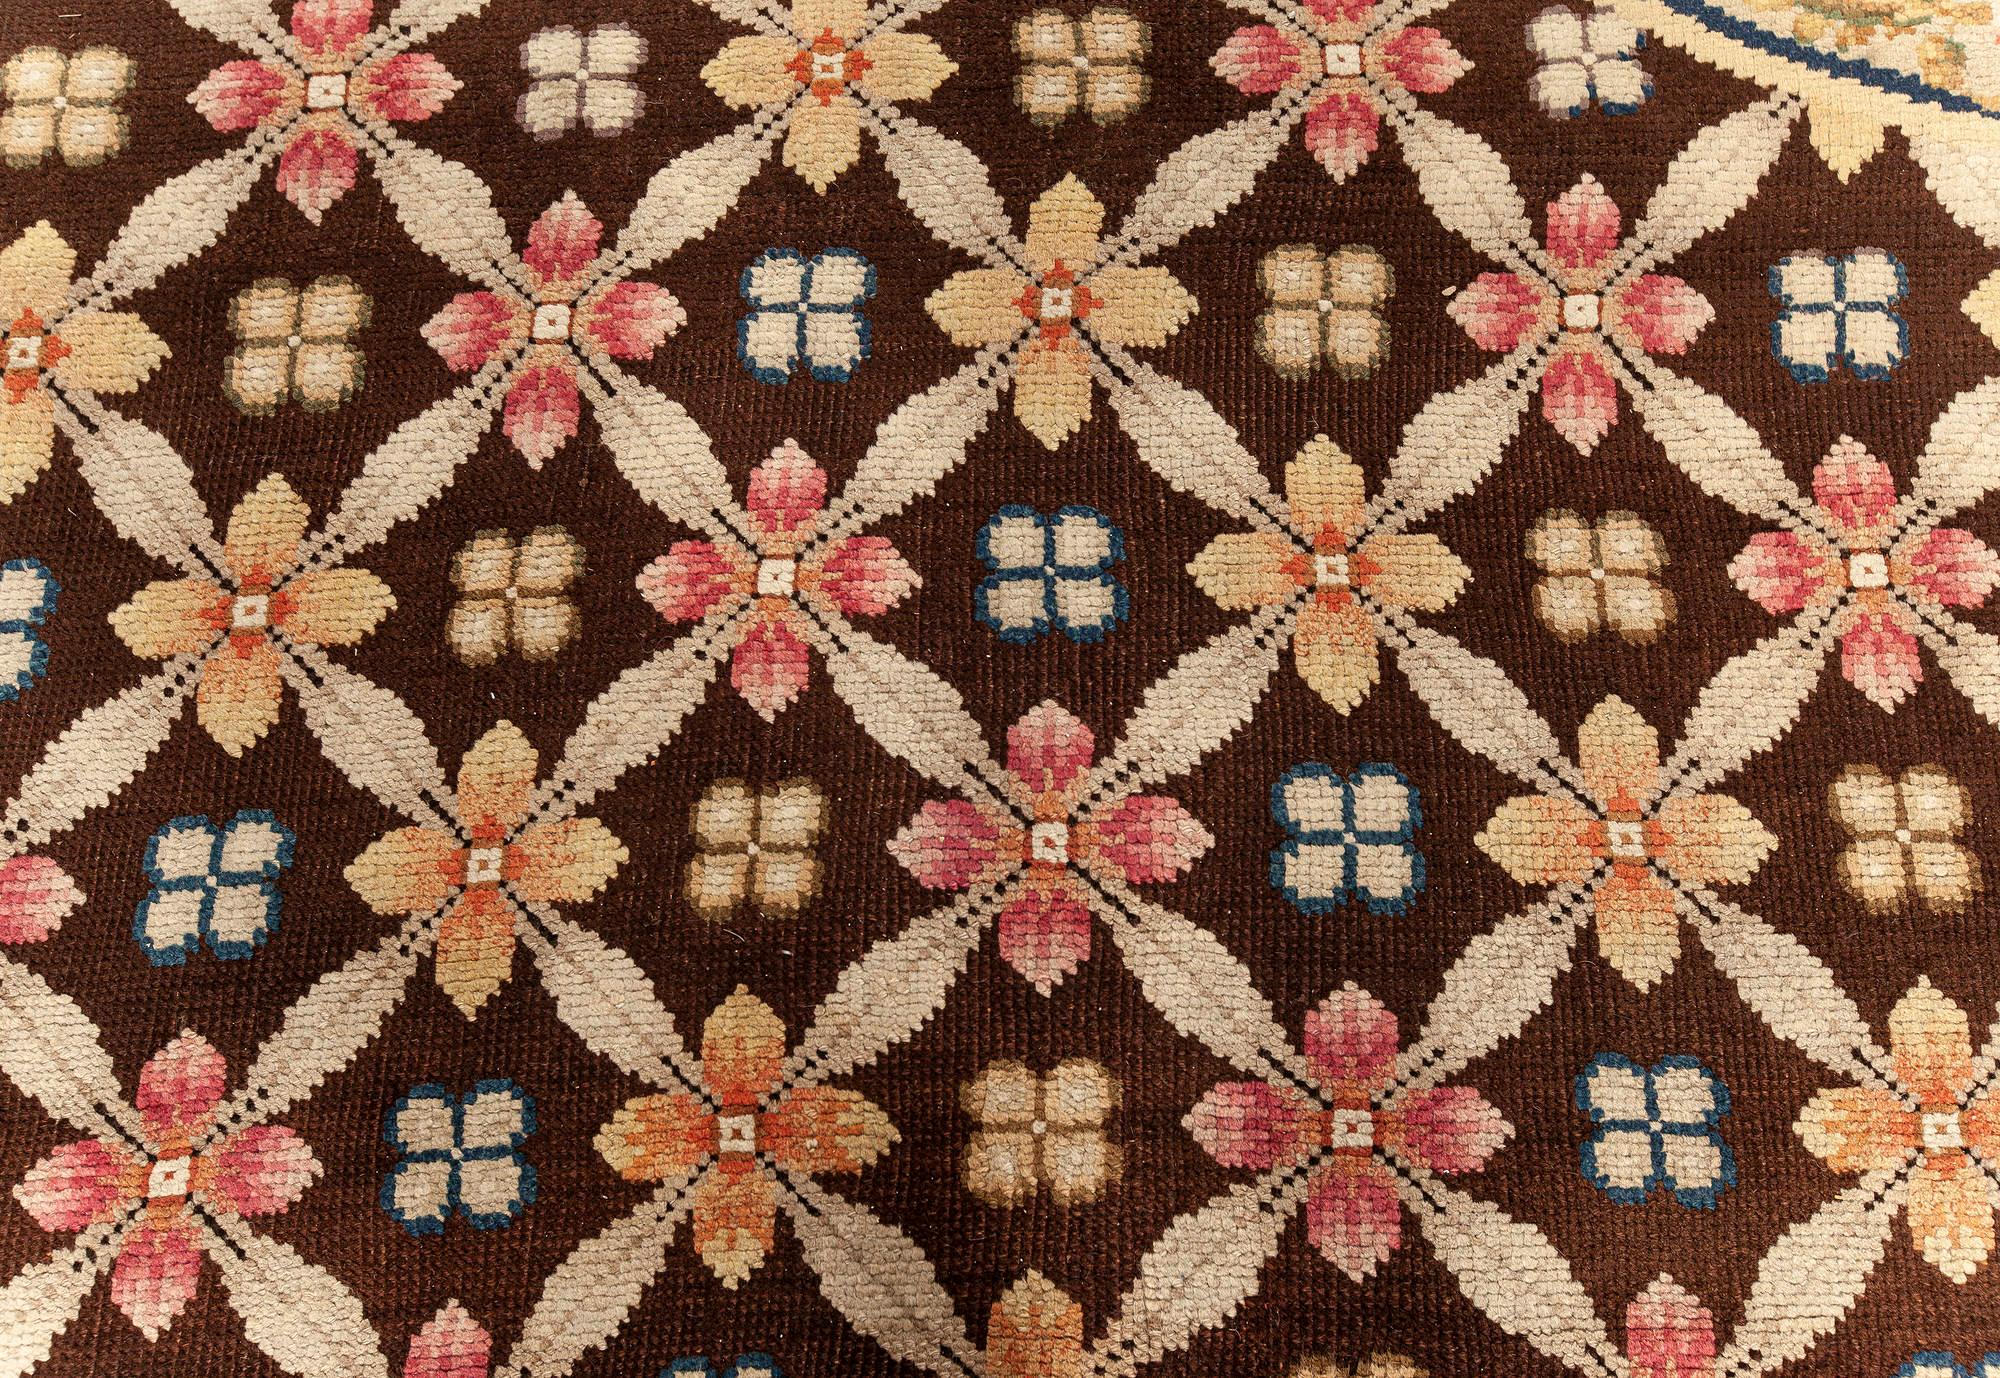 Antique English Axminster Beige, Brown, Green, Orange, Pink Handmade Wool Rug
Size: 12'2